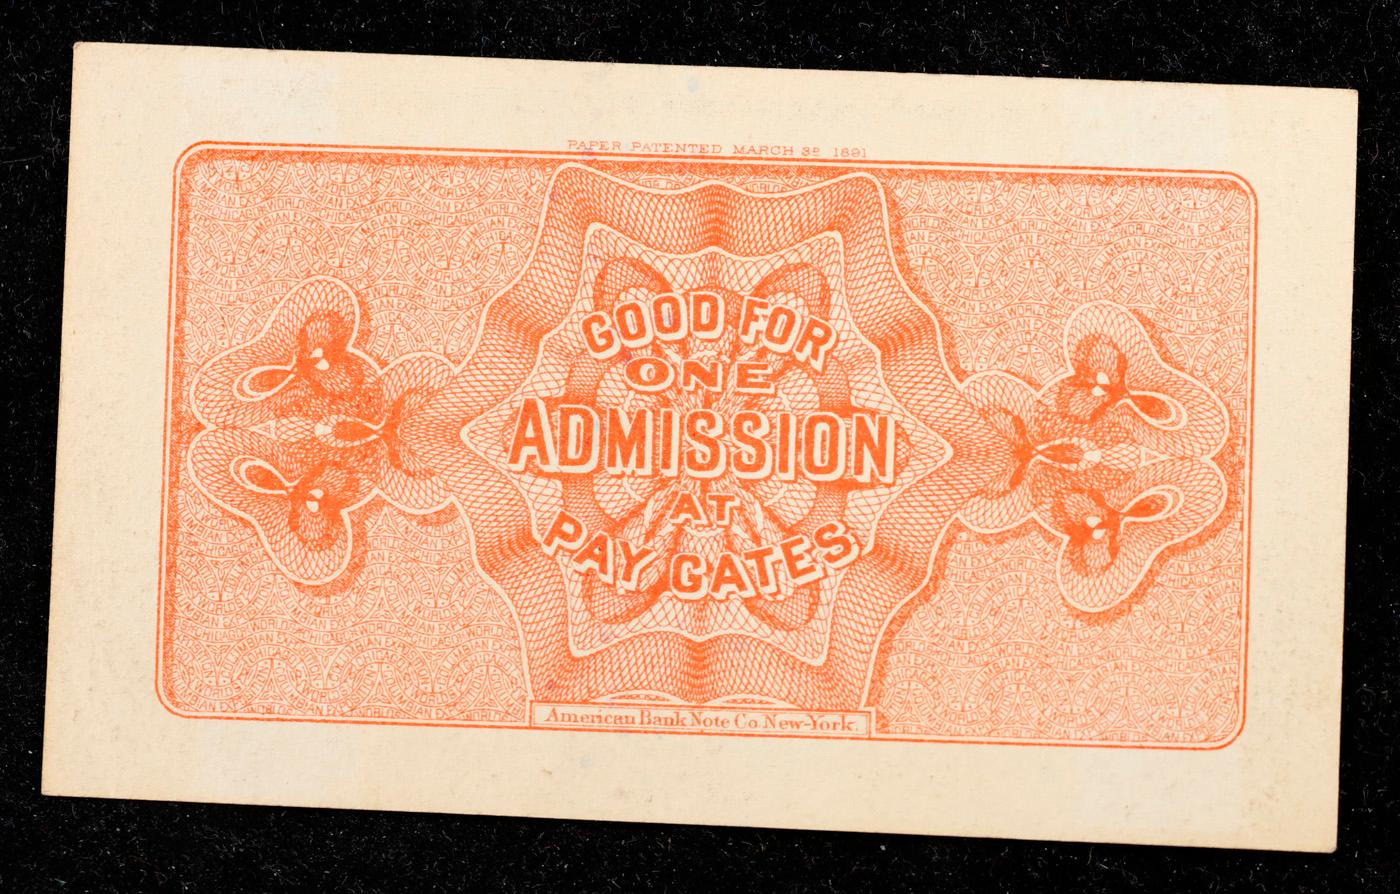 1893 World's Columbian Exposition Ticket, "Indian Chief" Grades Gem CU